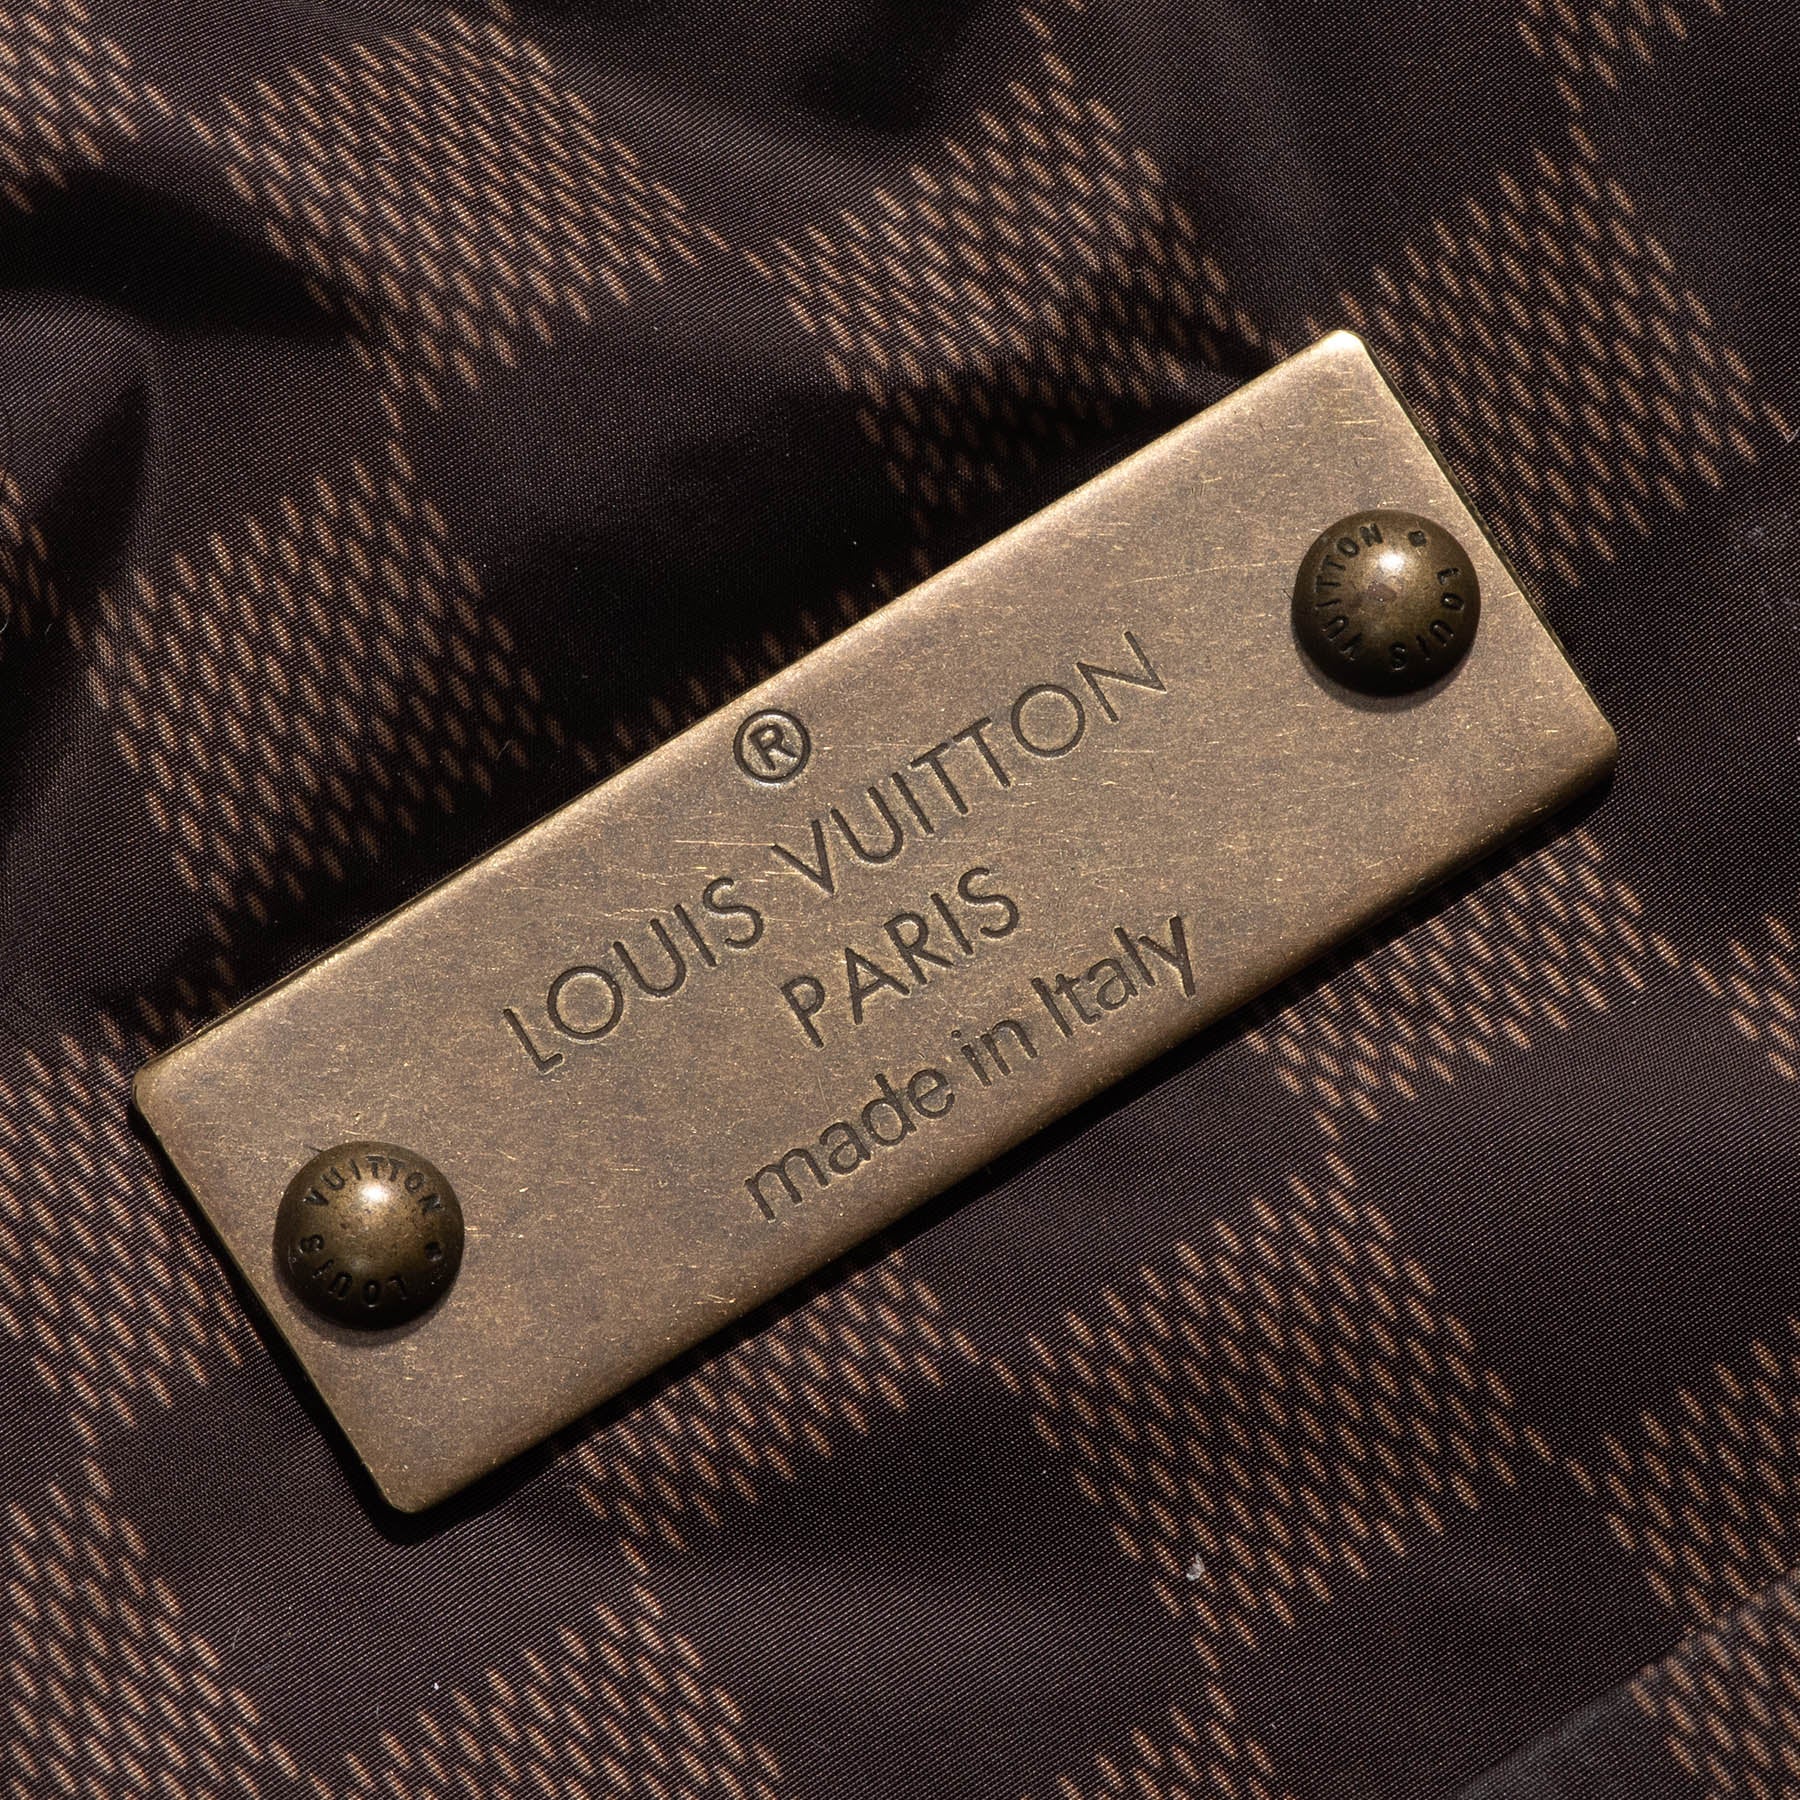 Louis Vuitton Soana Sacoche Limited Edition Kangaroo Vertical Bag